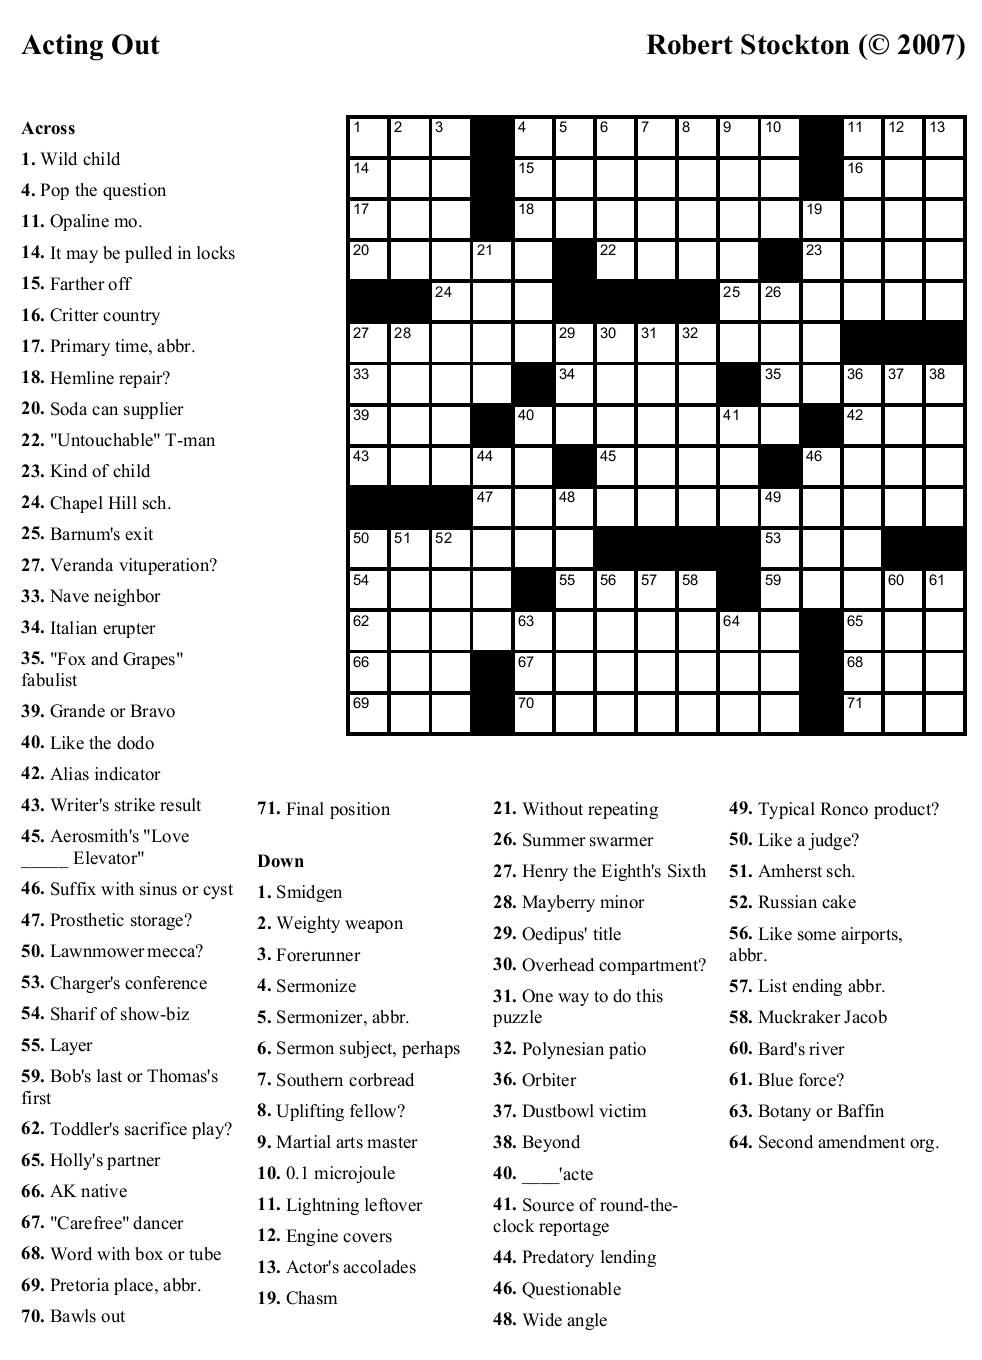 Crossword Puzzles Worksheets Printable